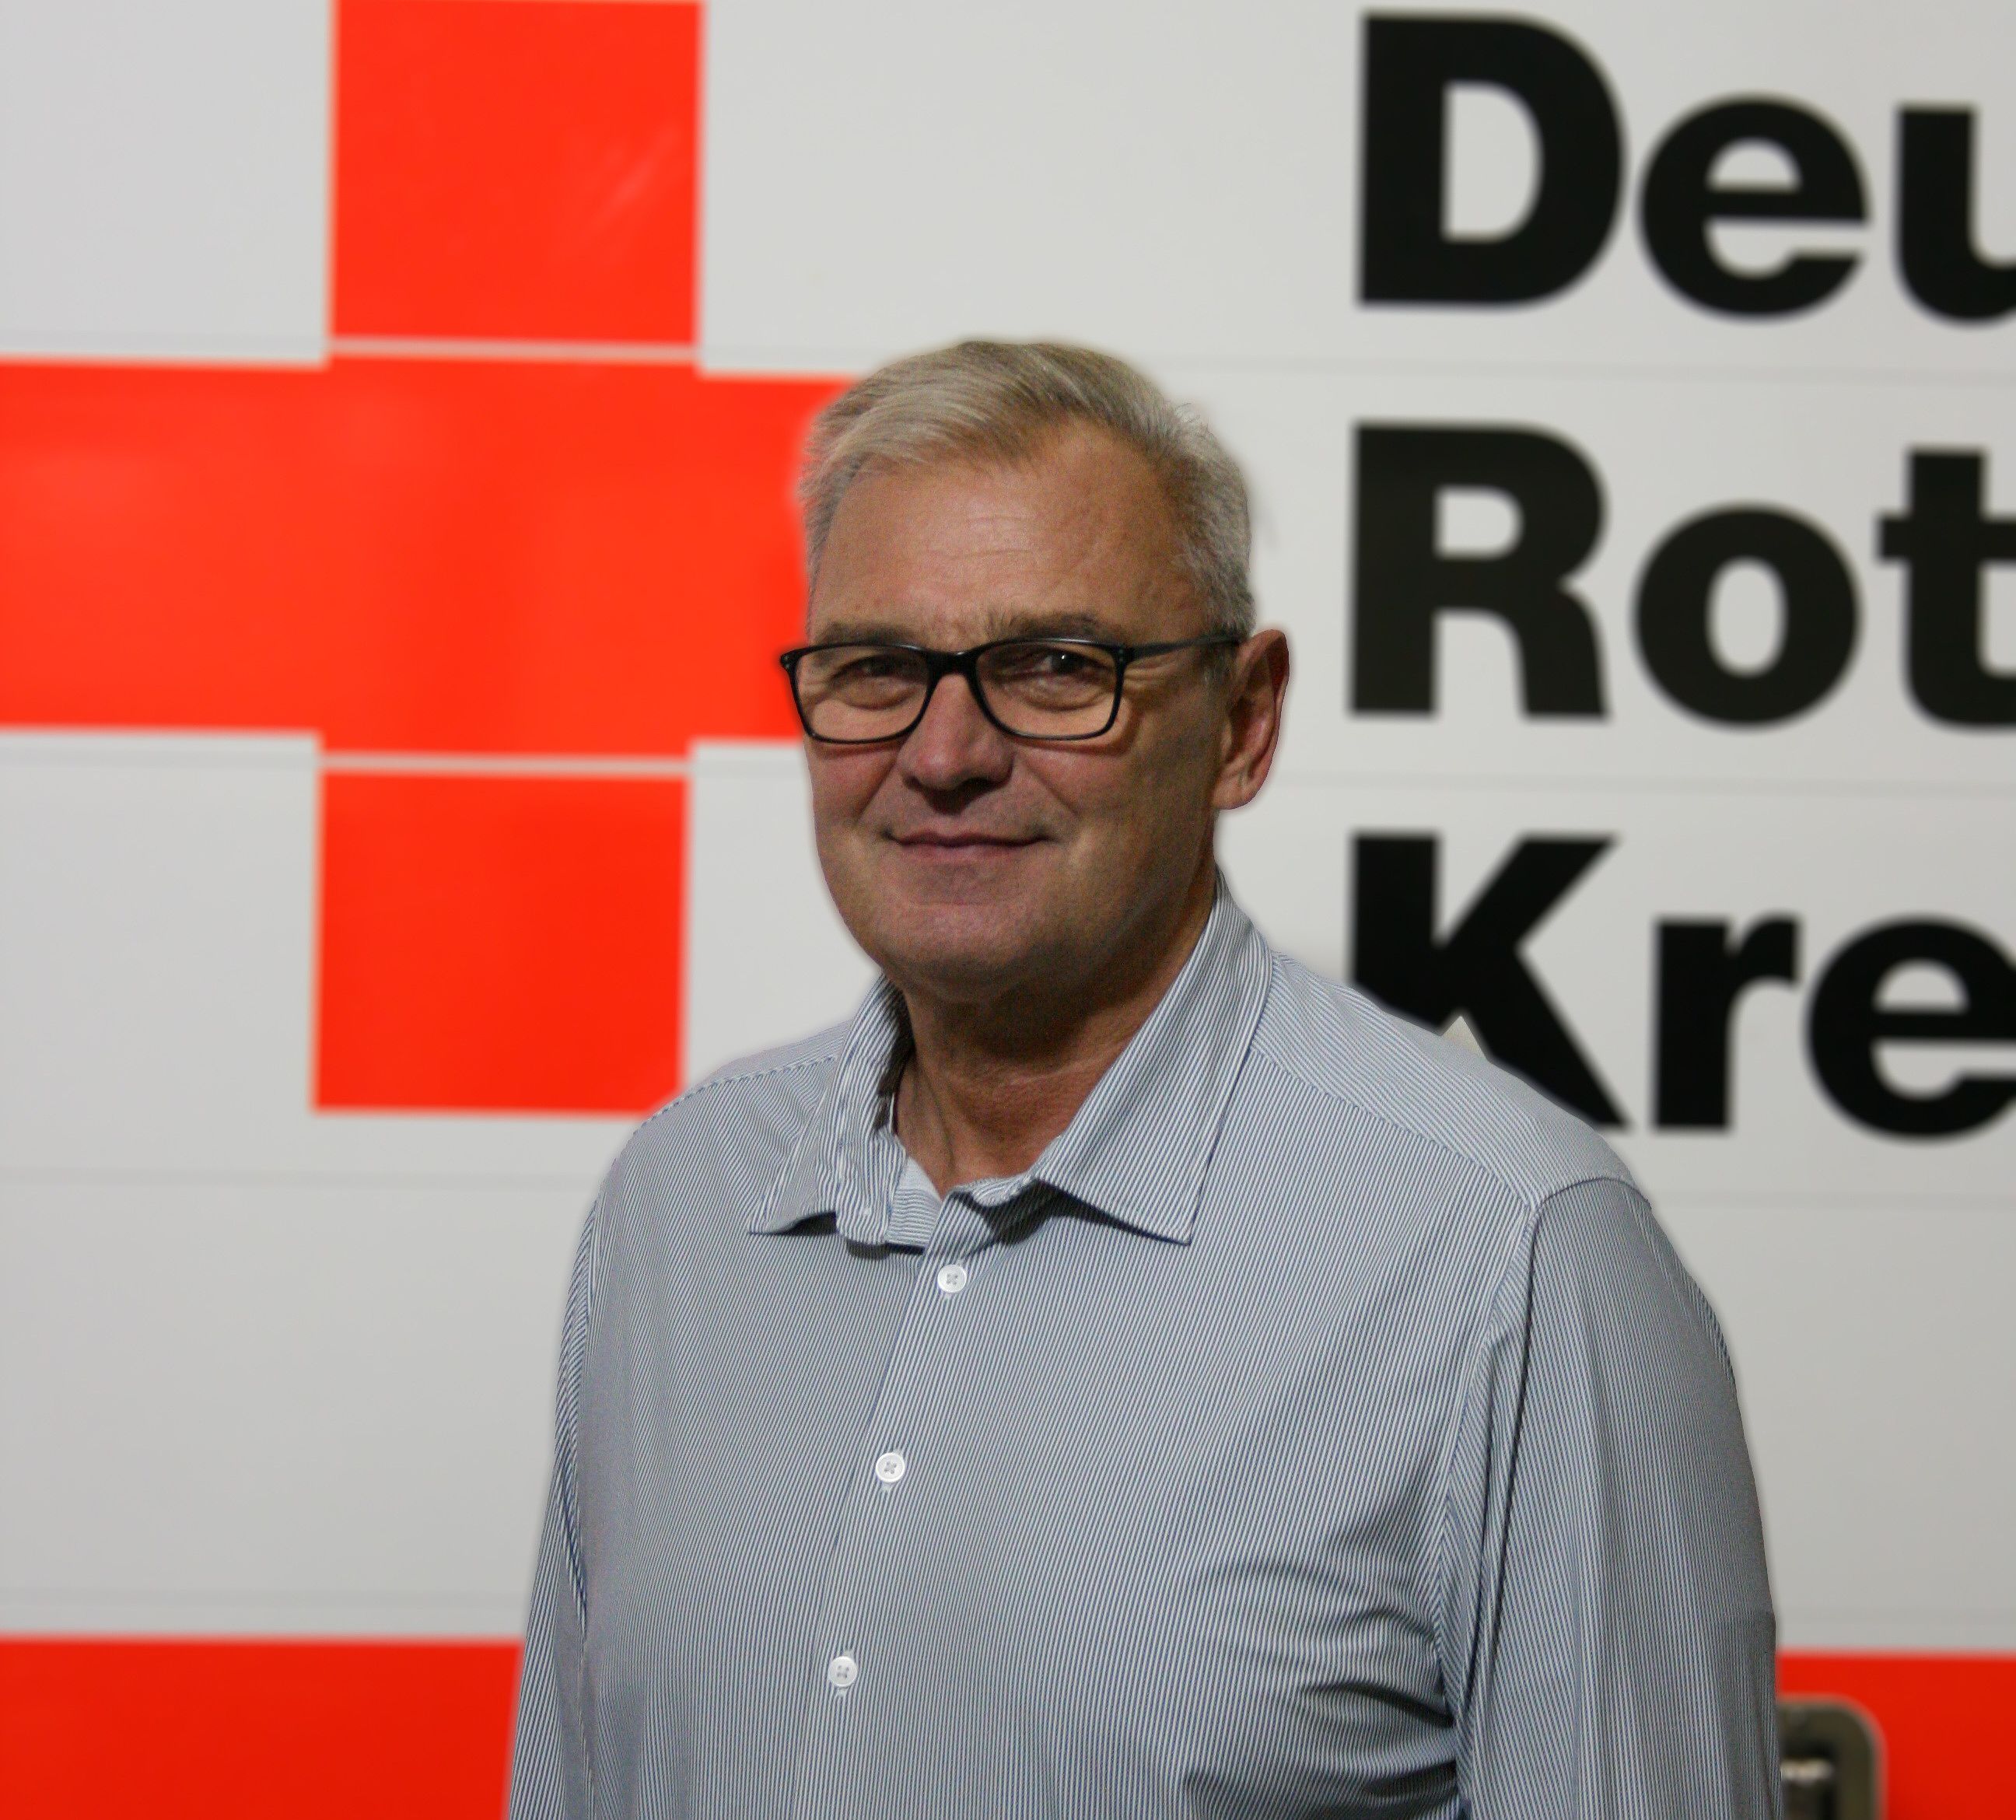 Gerhard Pfäffle